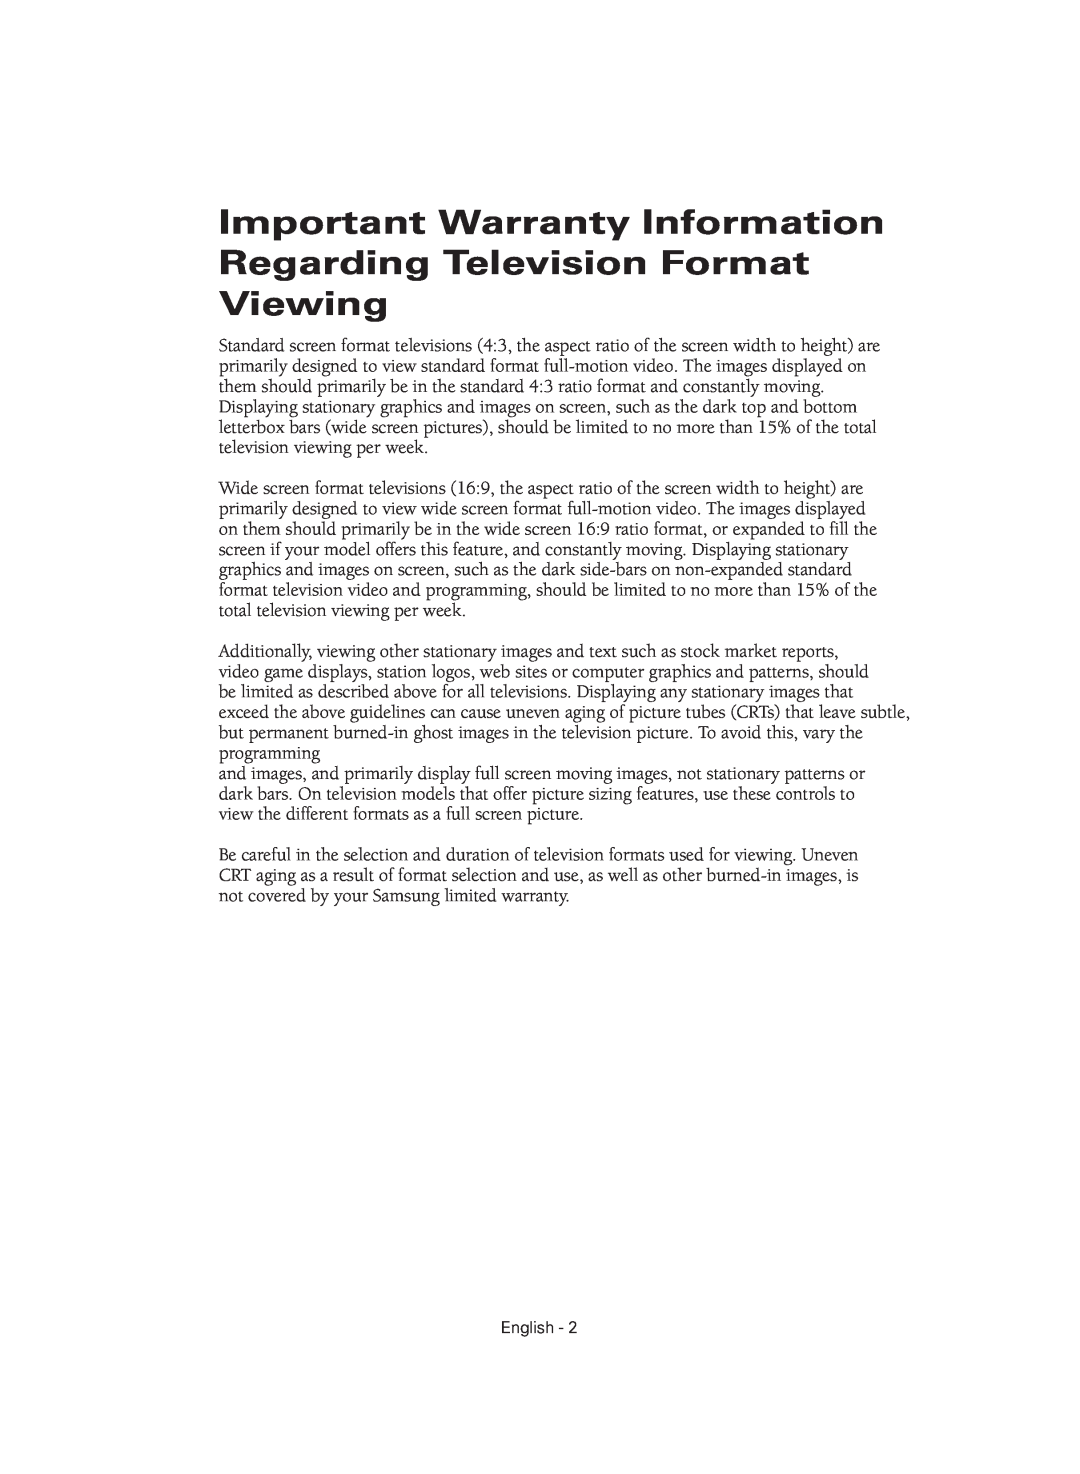 Samsung TX-R2735G manual Important Warranty Information Regarding Television Format Viewing, English 